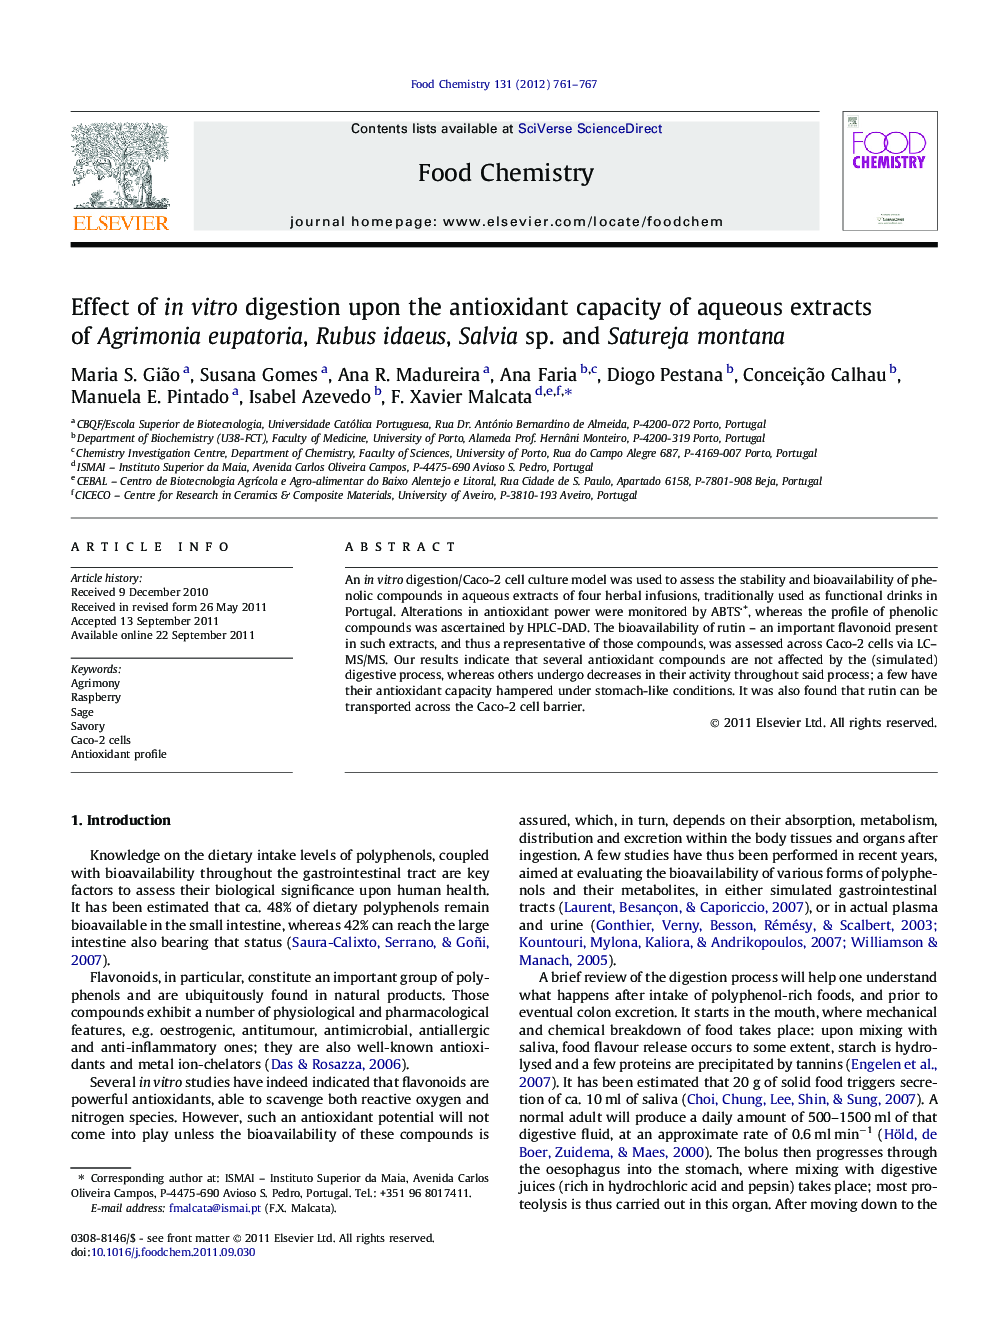 Effect of in vitro digestion upon the antioxidant capacity of aqueous extracts of Agrimonia eupatoria, Rubus idaeus, Salvia sp. and Satureja montana